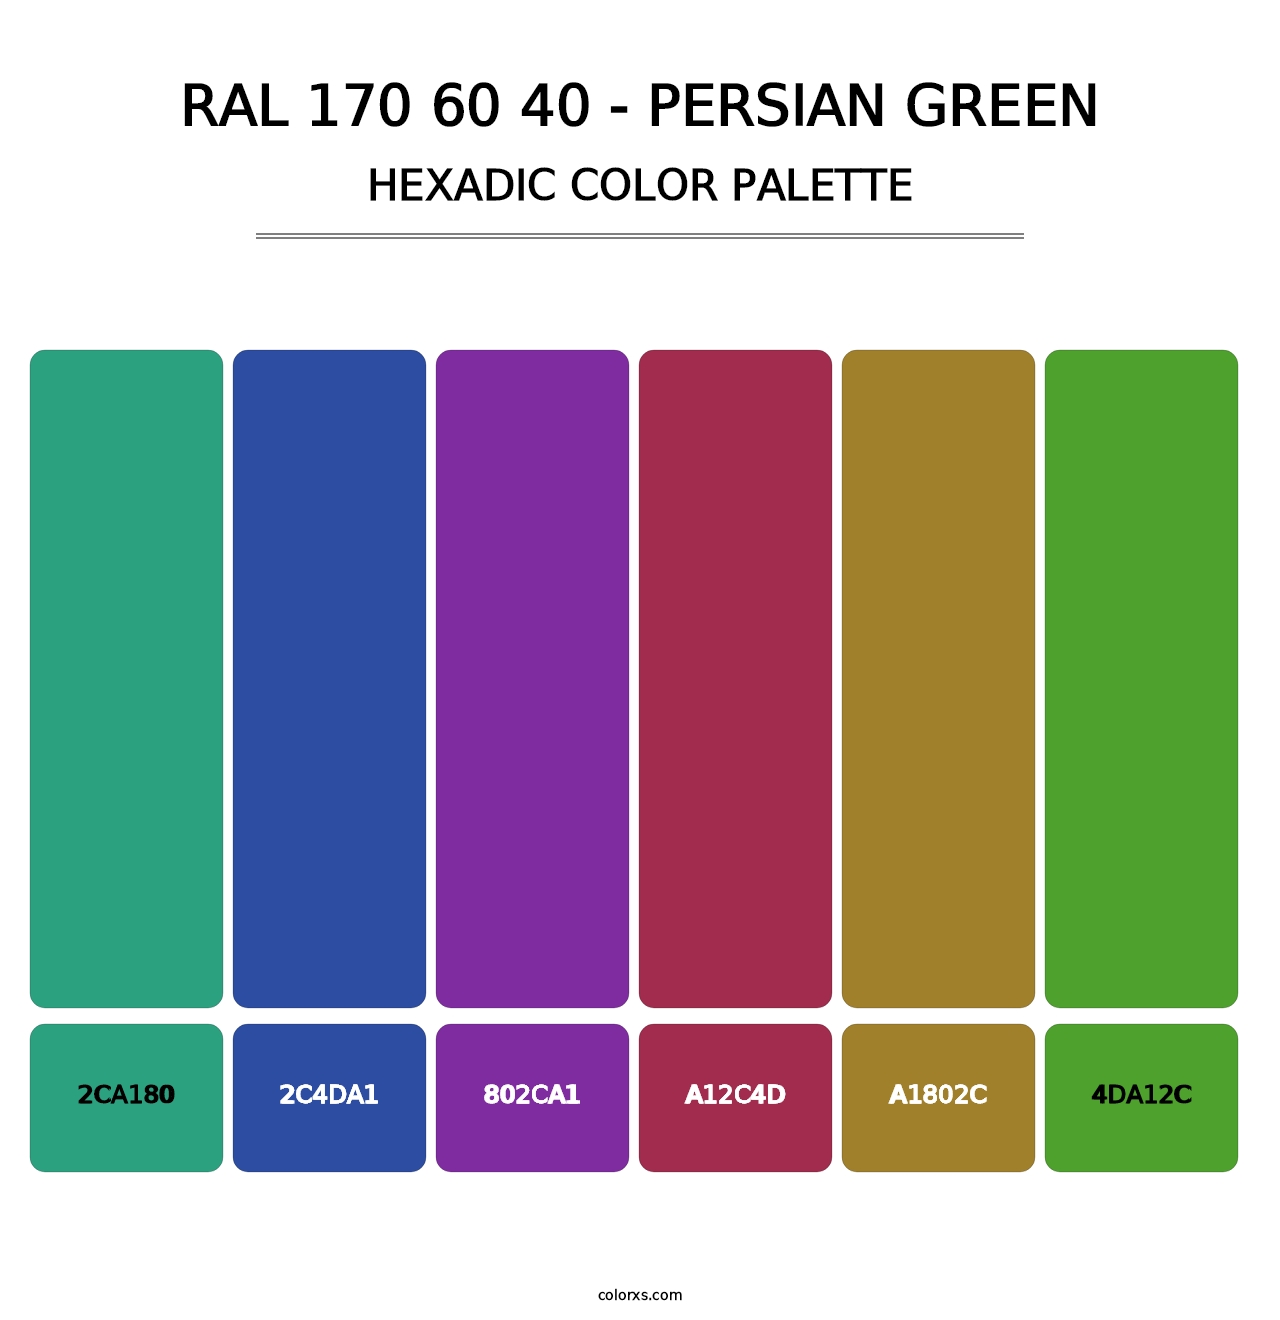 RAL 170 60 40 - Persian Green - Hexadic Color Palette